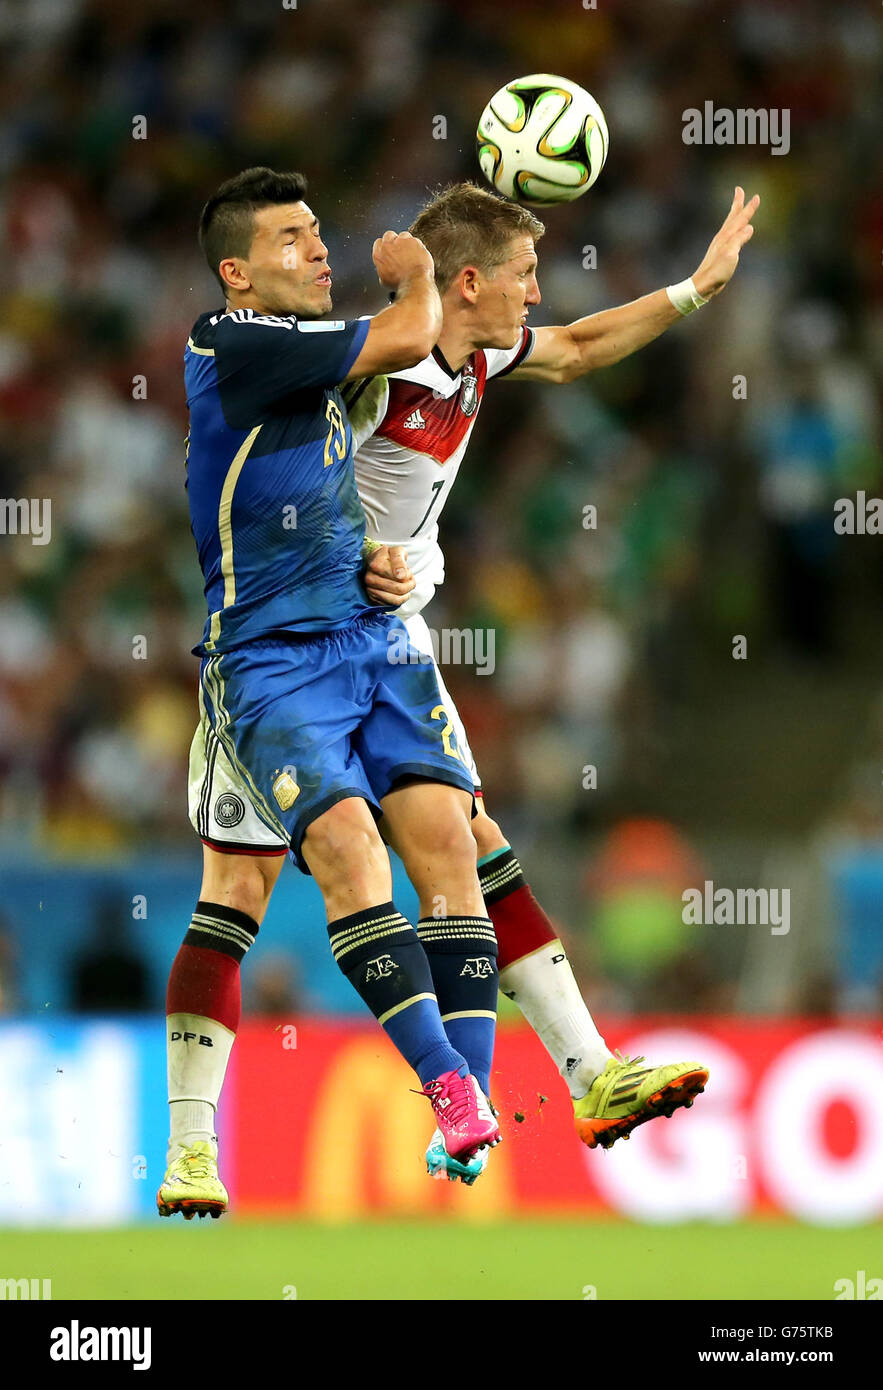 Soccer - FIFA World Cup 2014 - Final - Germany v Argentina - Estadio do Maracana. Germany's Bastian Schweinsteiger (right) collides with Argentina's Sergio Aguero Stock Photo